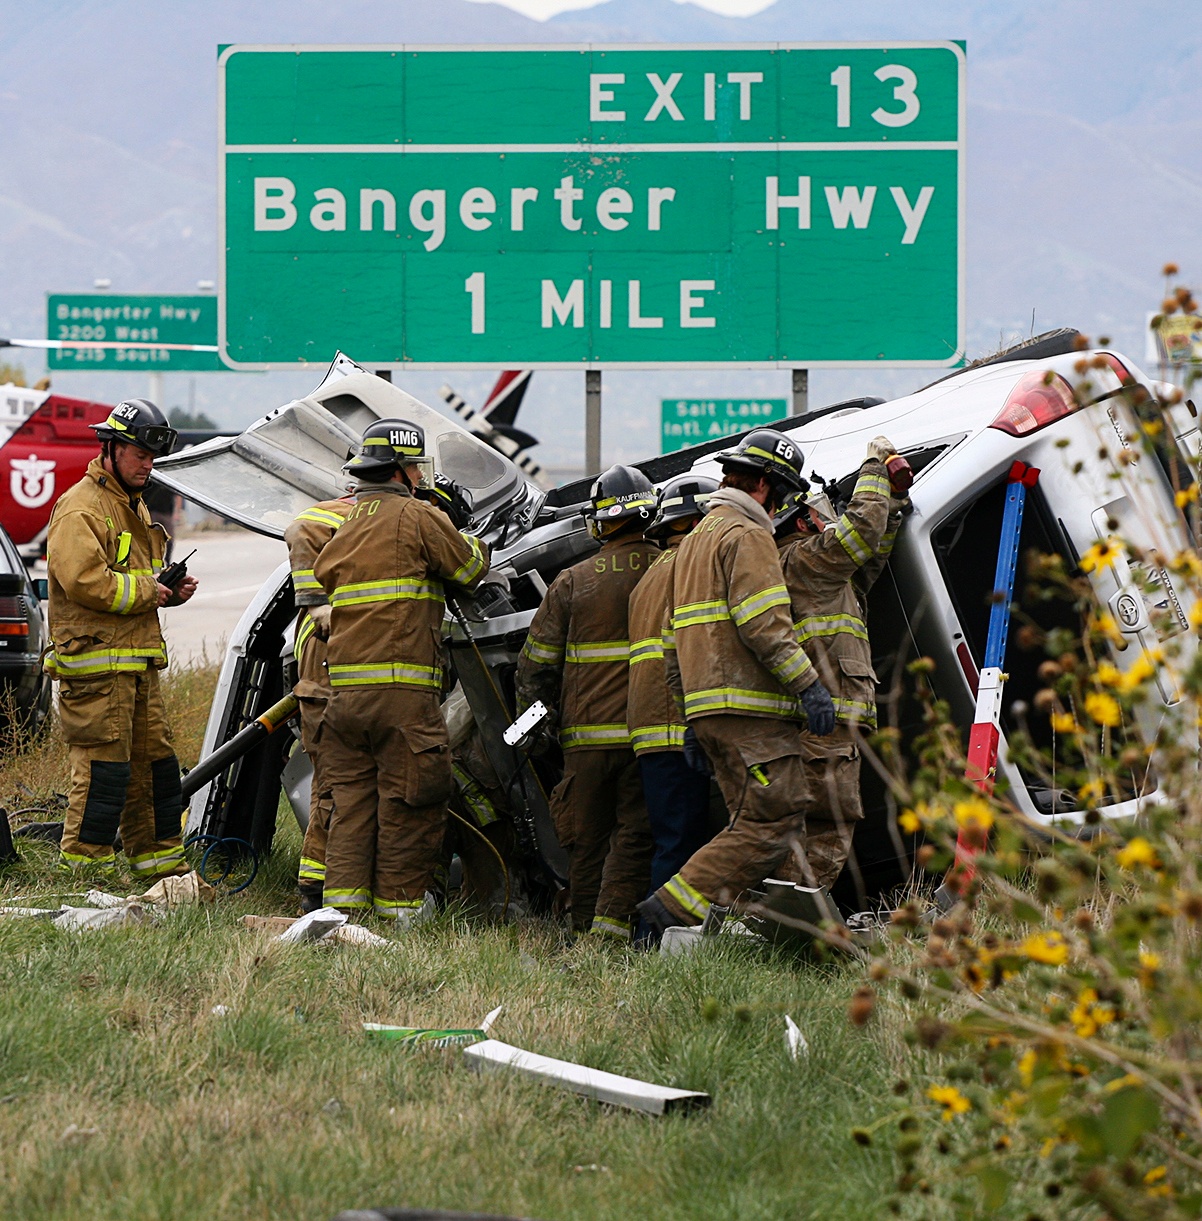 Troy Hagen_Incident Management_Traffic Accident.jpg